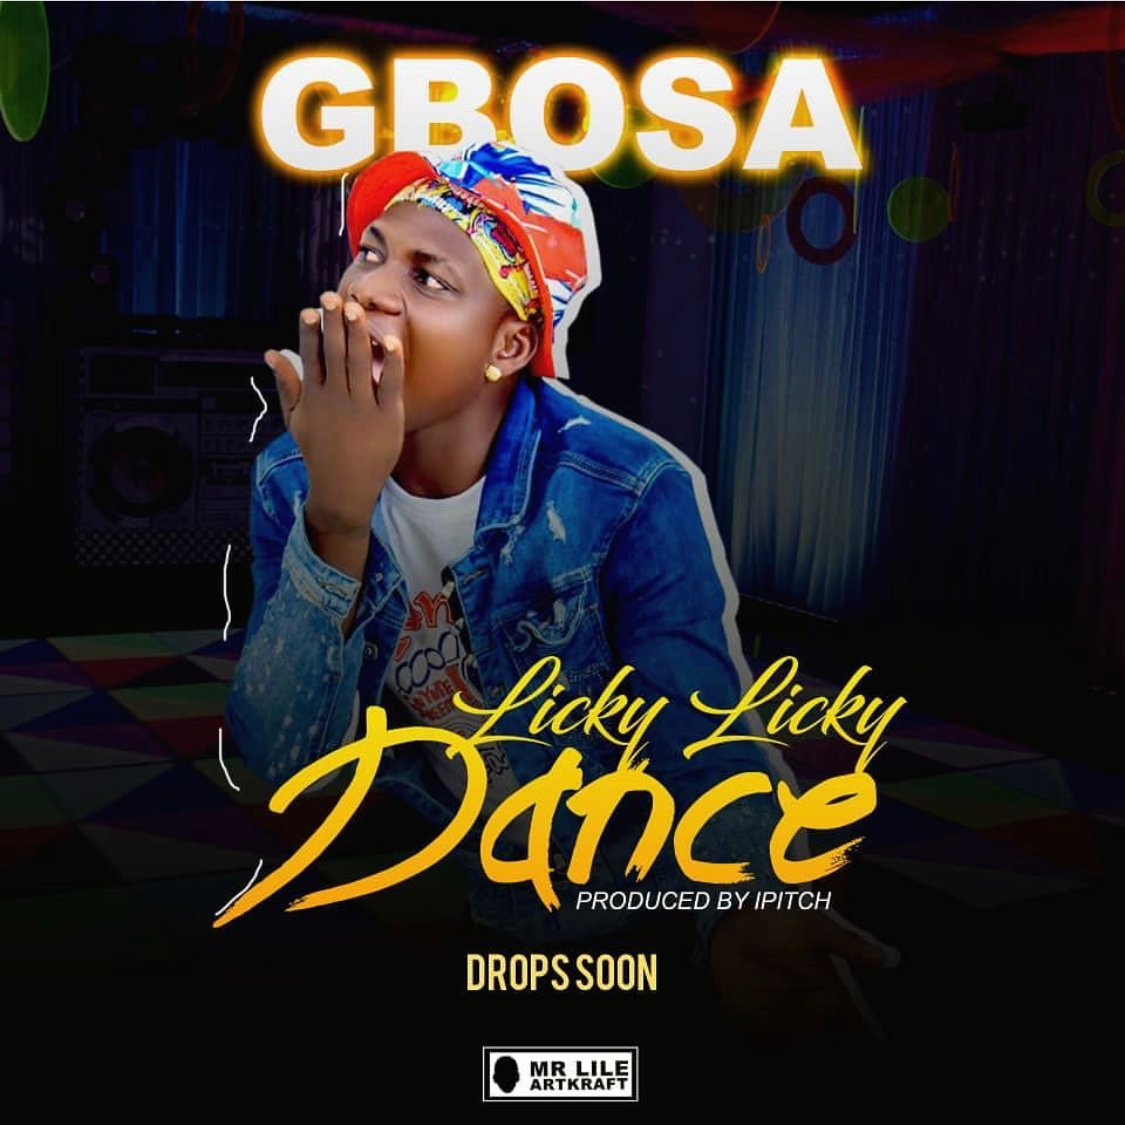 Gbosa - Licky licky dance image